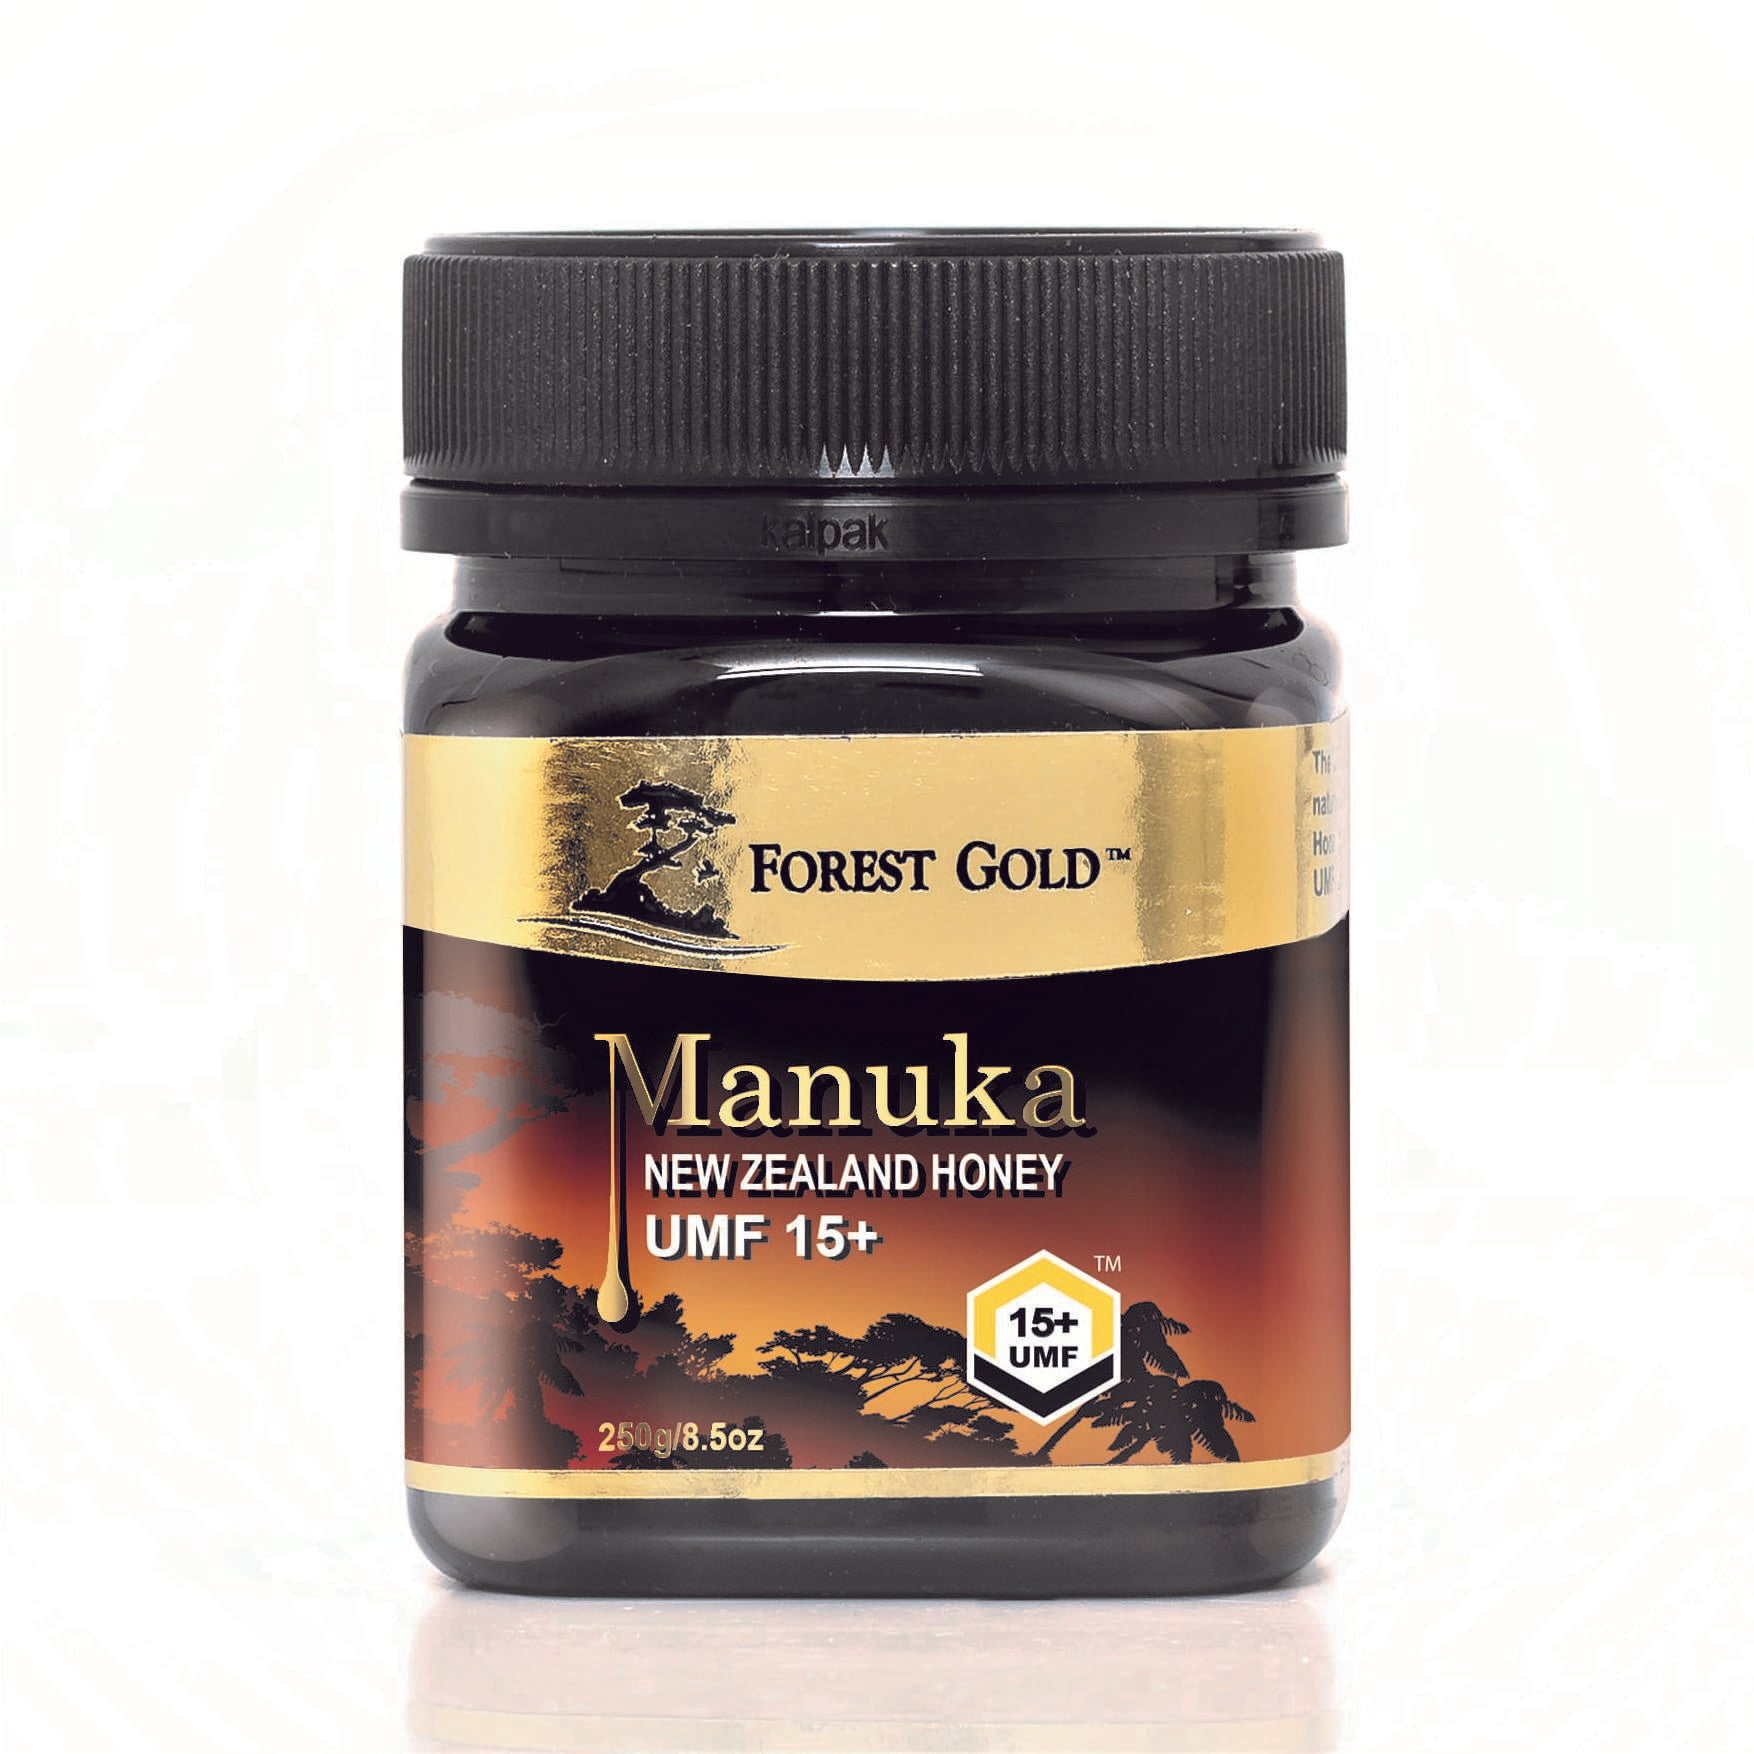 Forest Gold Manuka UMF 15+ Certified NZ Honey- 250g Manuka Honey Organichub   